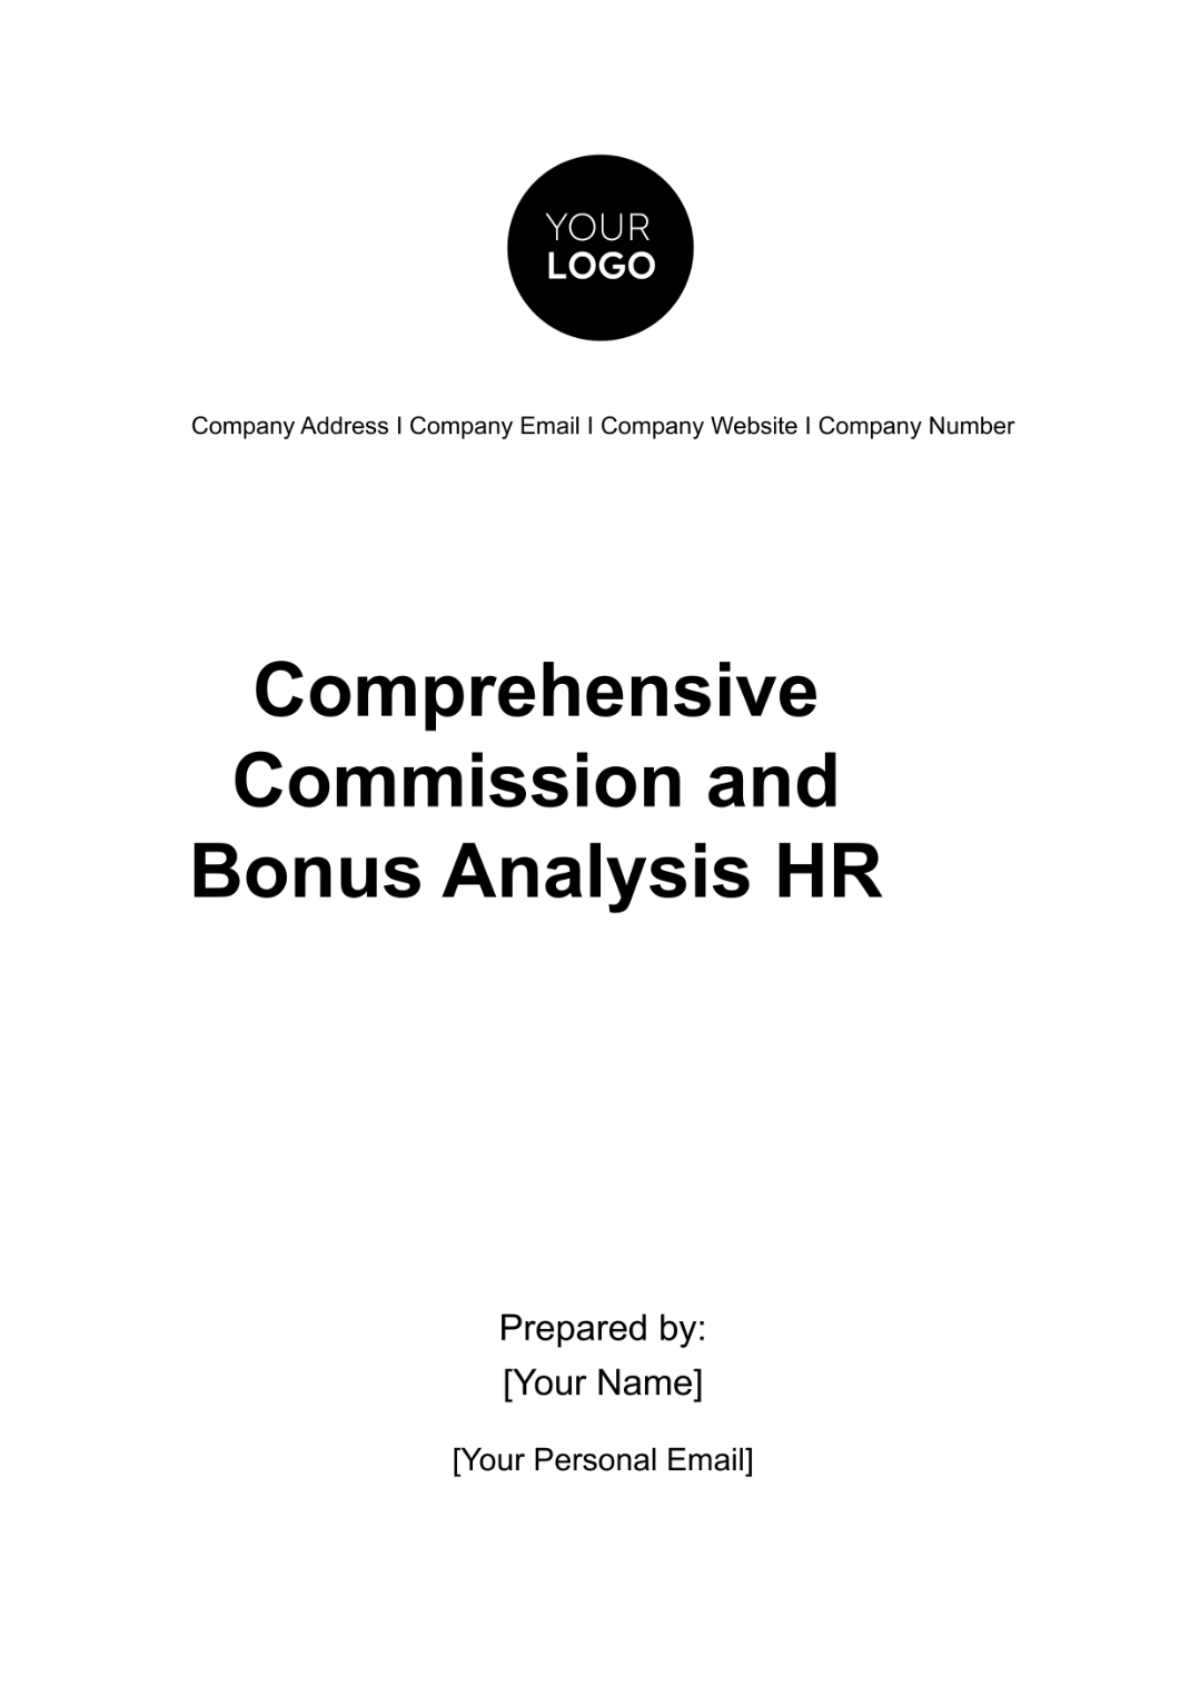 Free Comprehensive Commission and Bonus Analysis HR Template